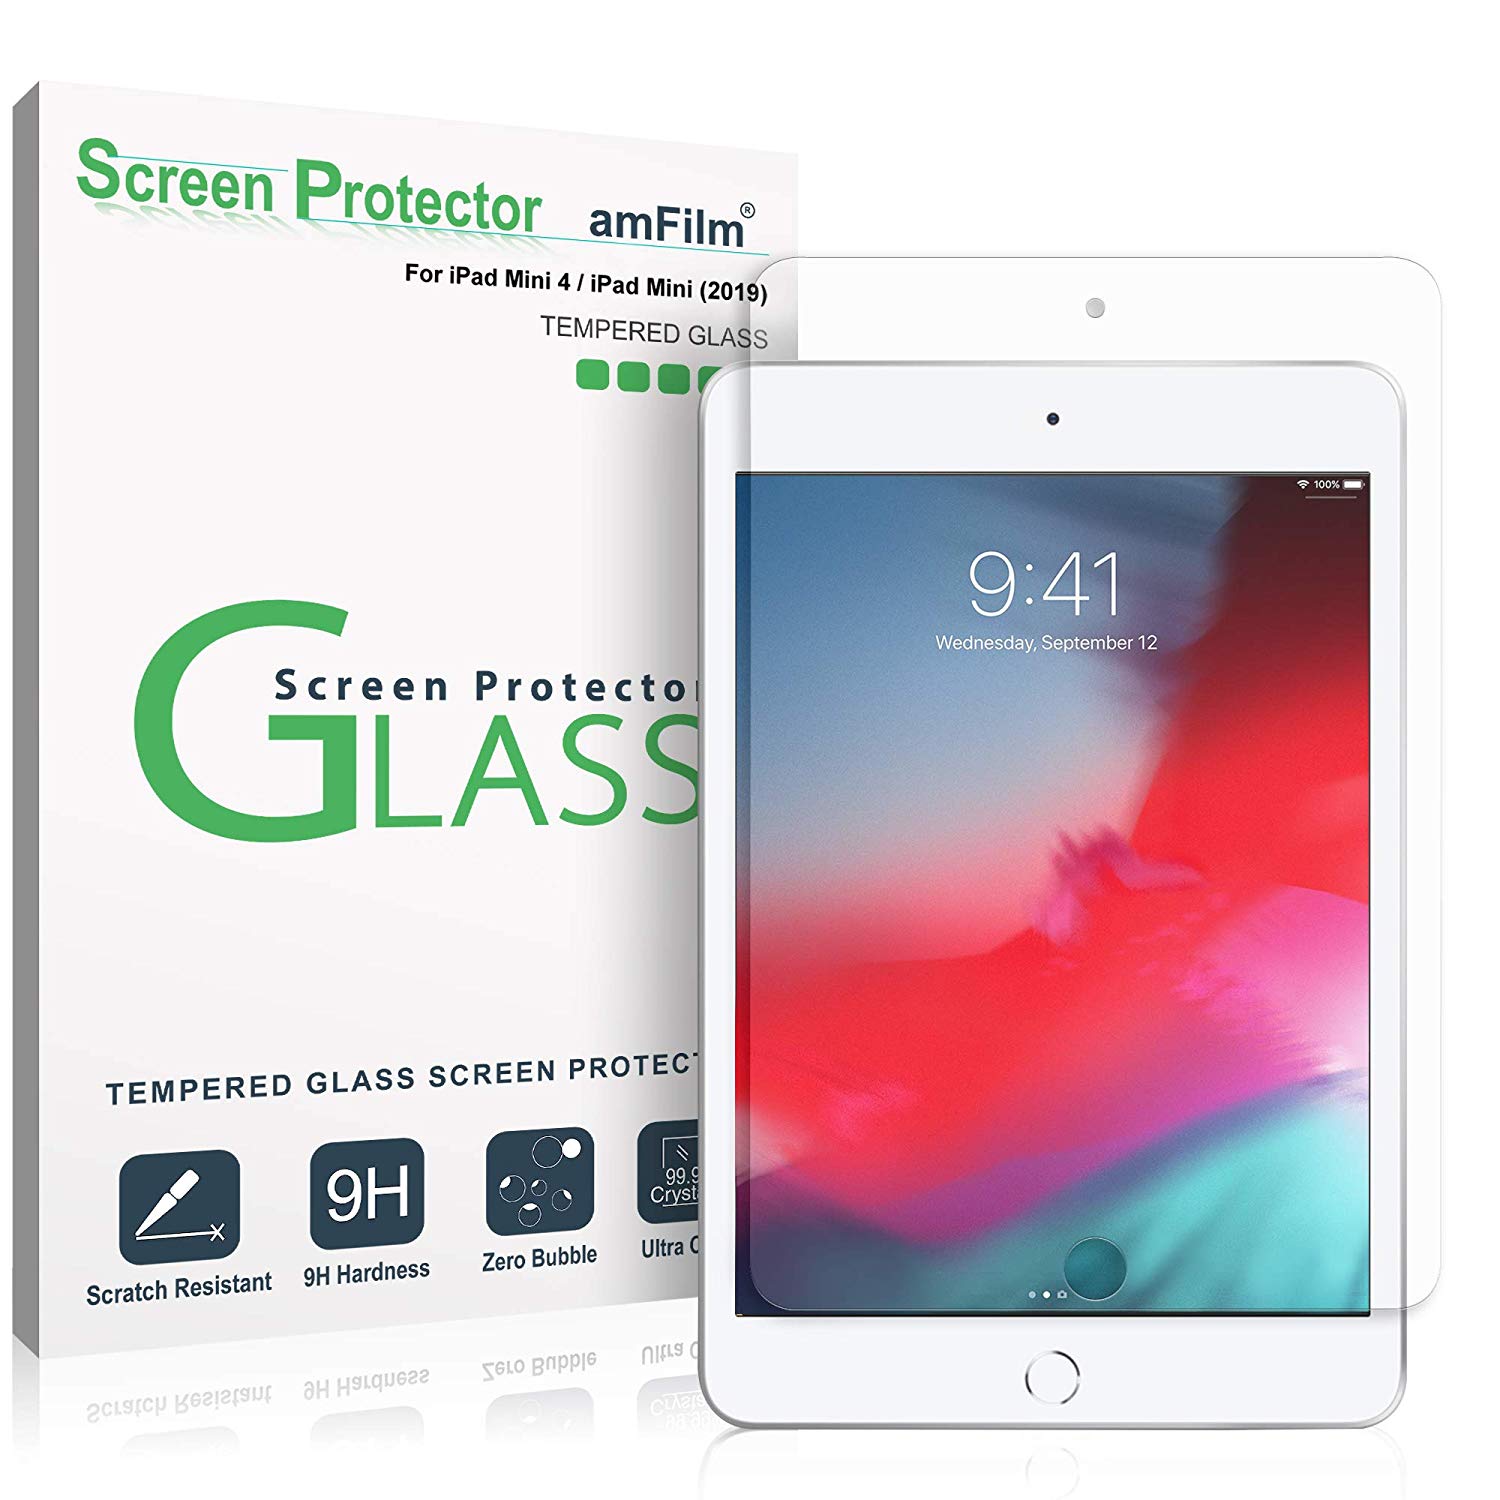 amFilm iPad mini 5 screen protectors